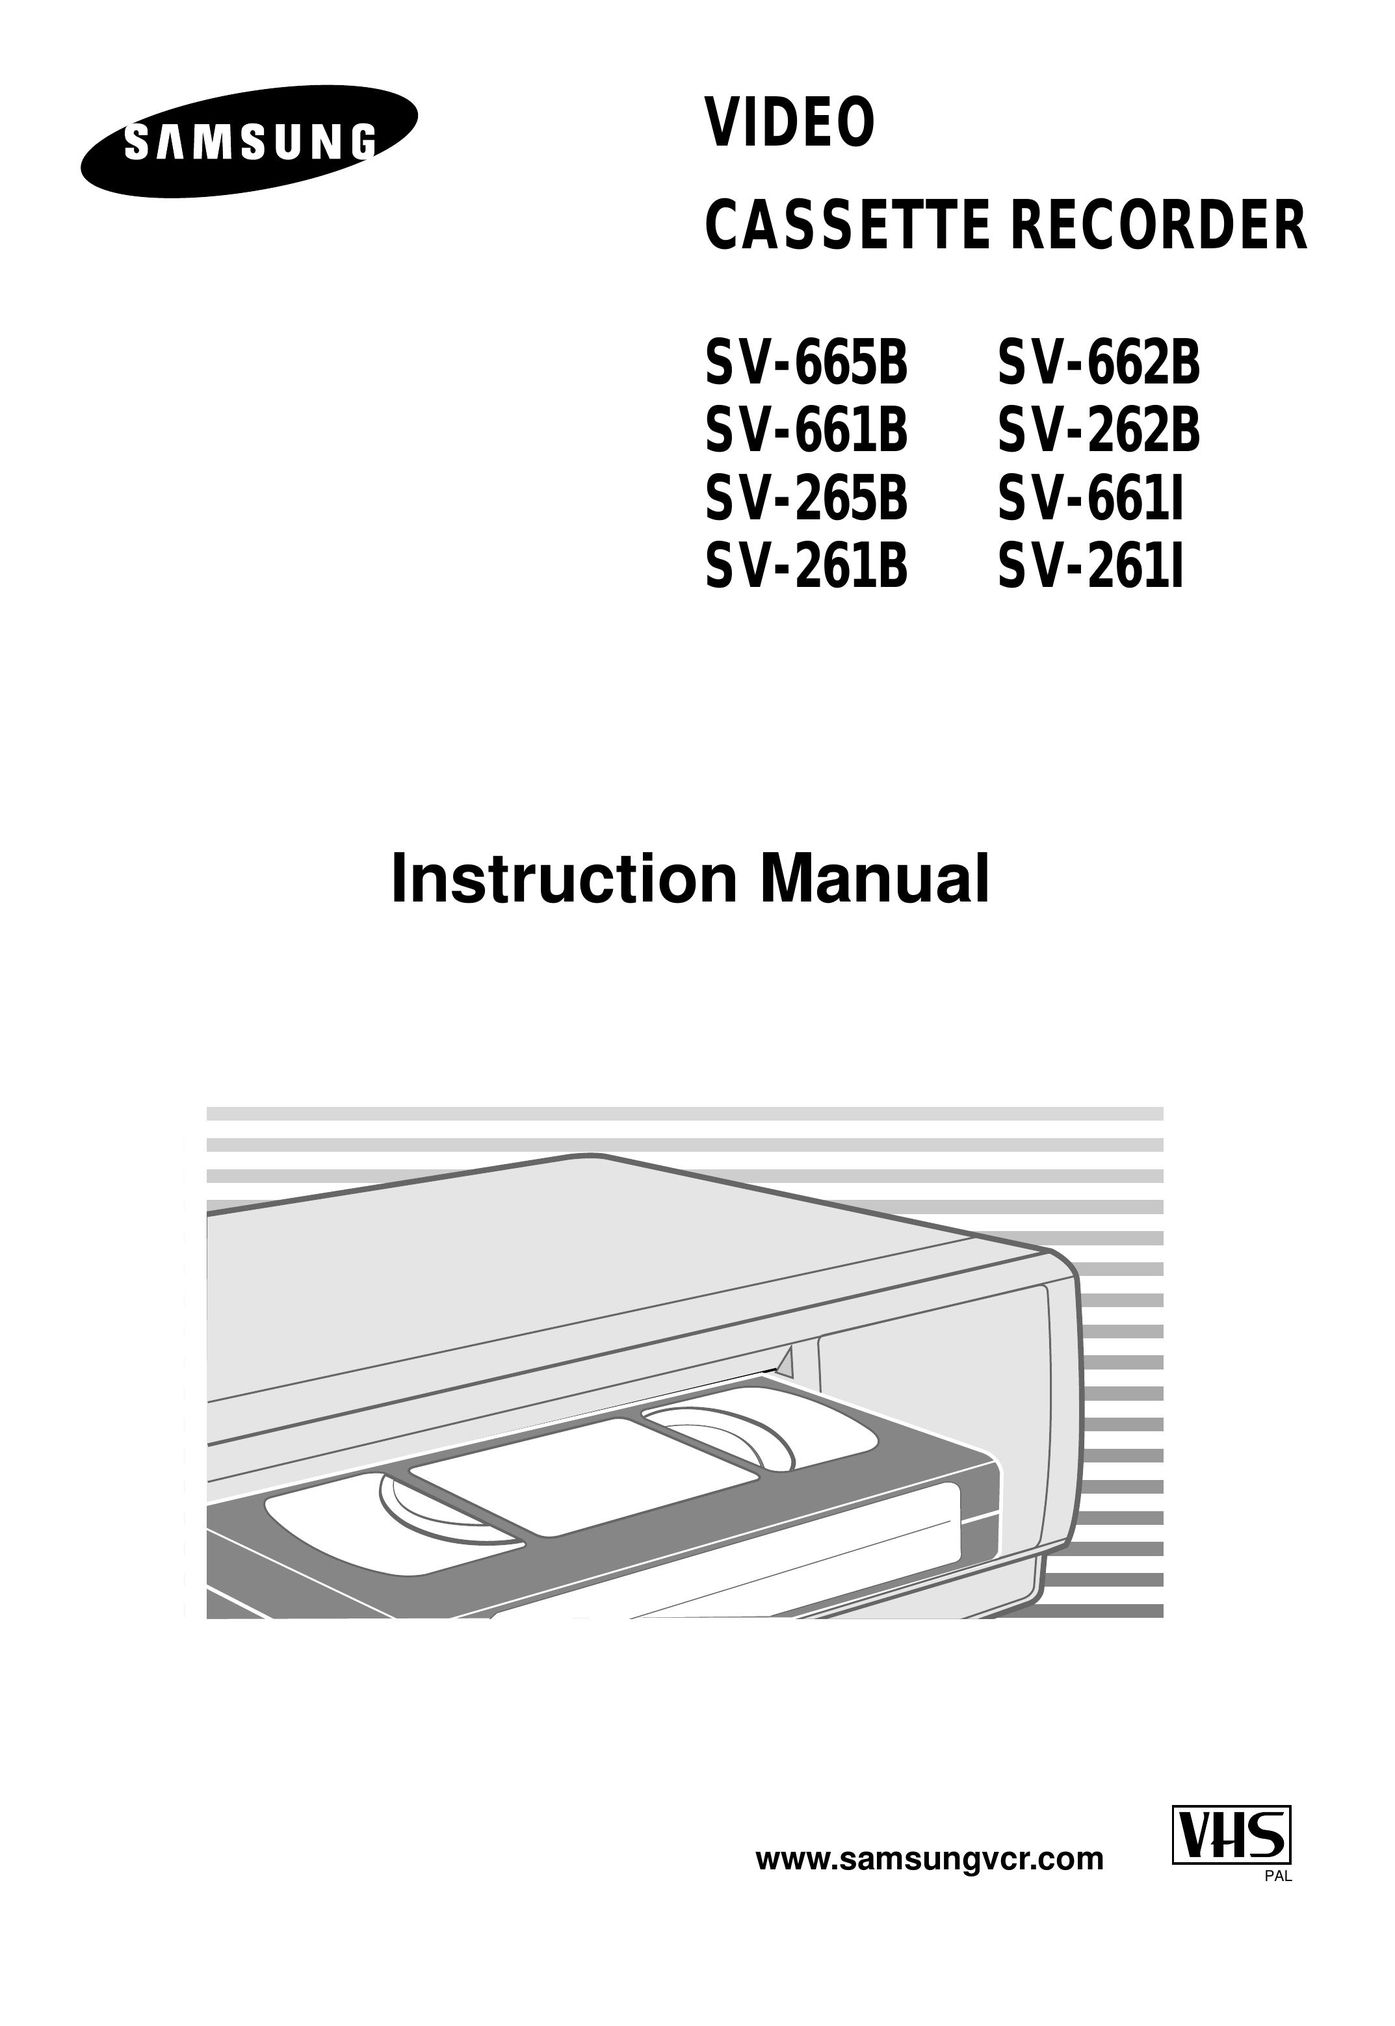 Samsung SV-261I VCR User Manual